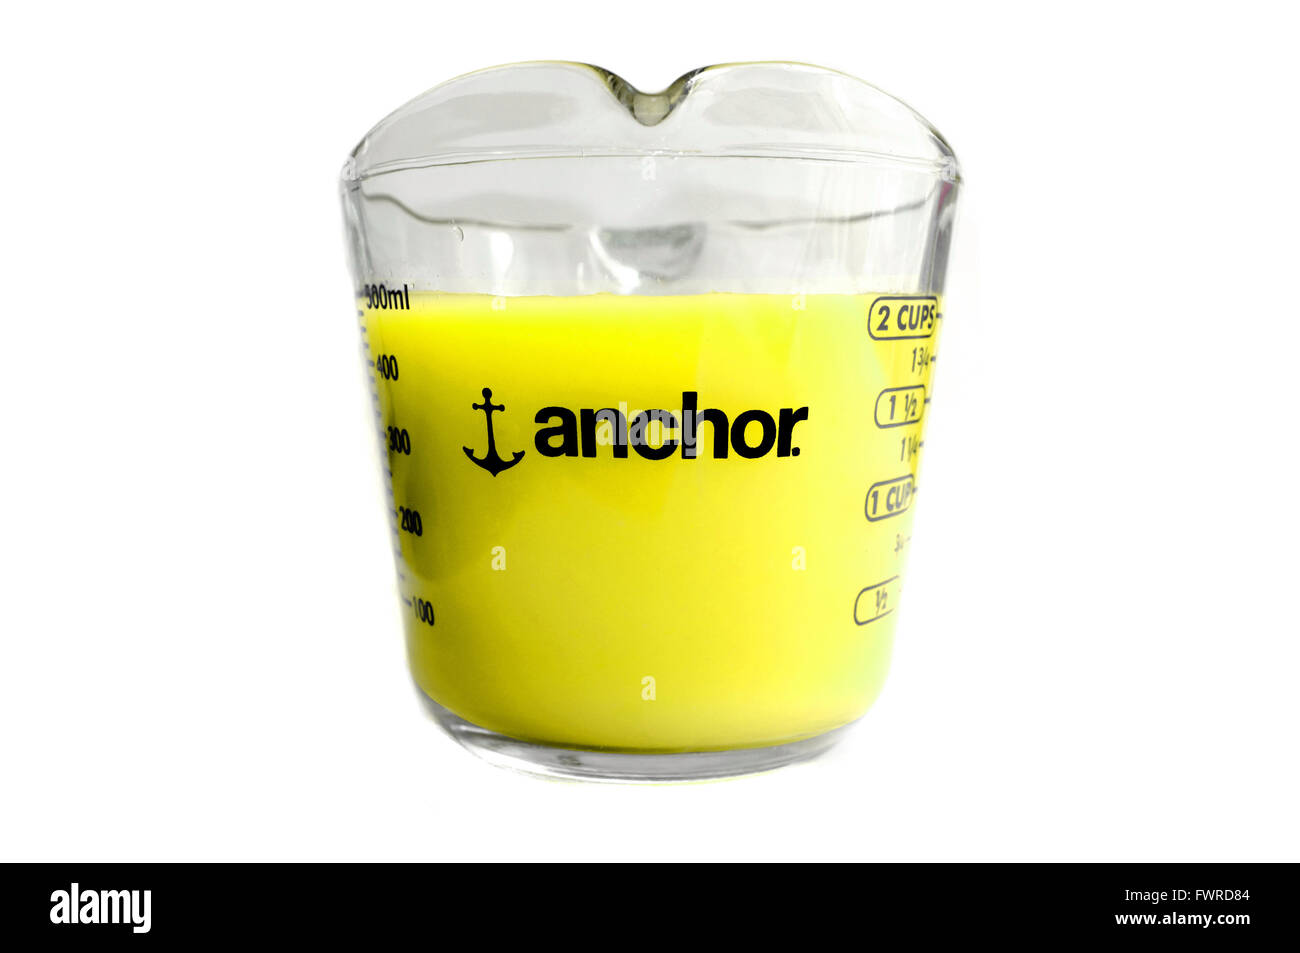 https://c8.alamy.com/comp/FWRD84/the-front-of-an-anchor-measuring-jug-full-of-yellow-coloured-liquid-FWRD84.jpg